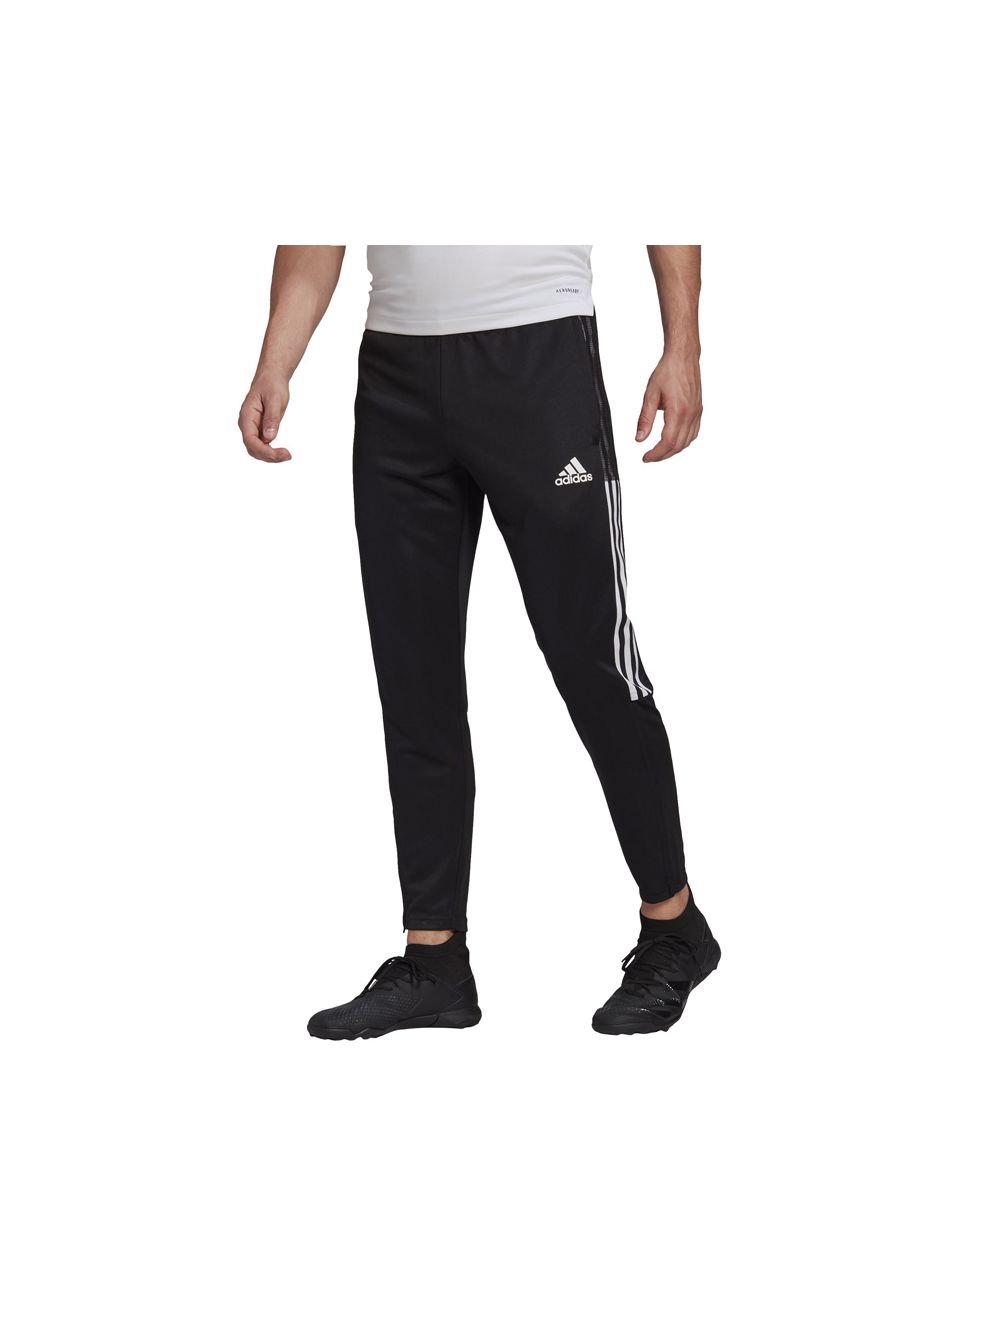 NEW Adidas Tiro 21 Track Pants Womens Athletic AeroReady Training Pants |  eBay